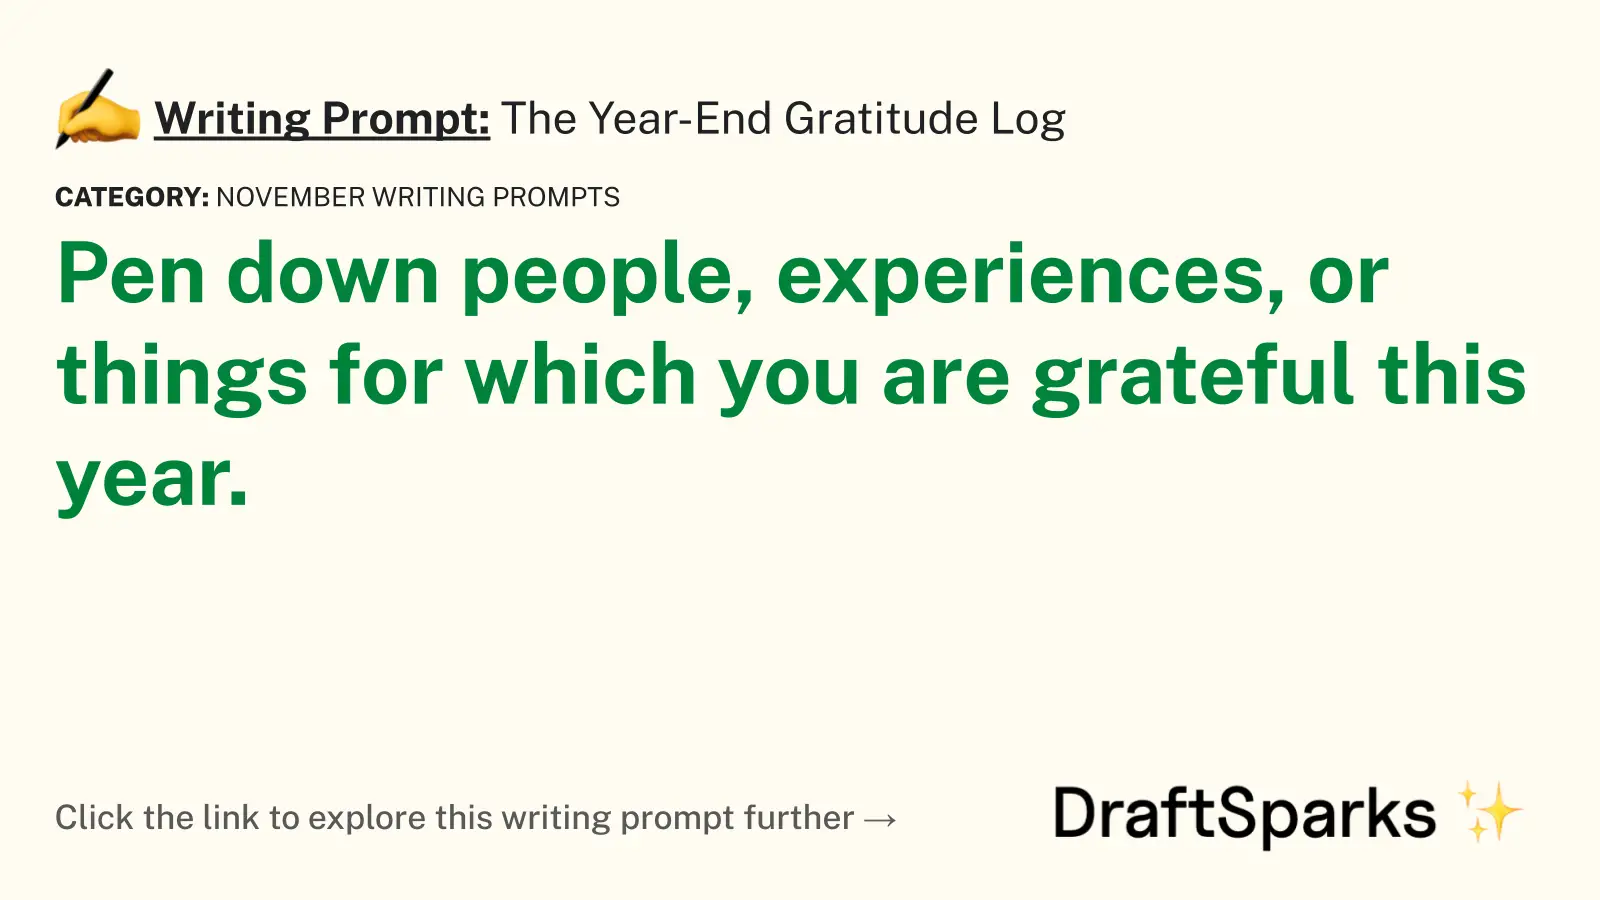 The Year-End Gratitude Log